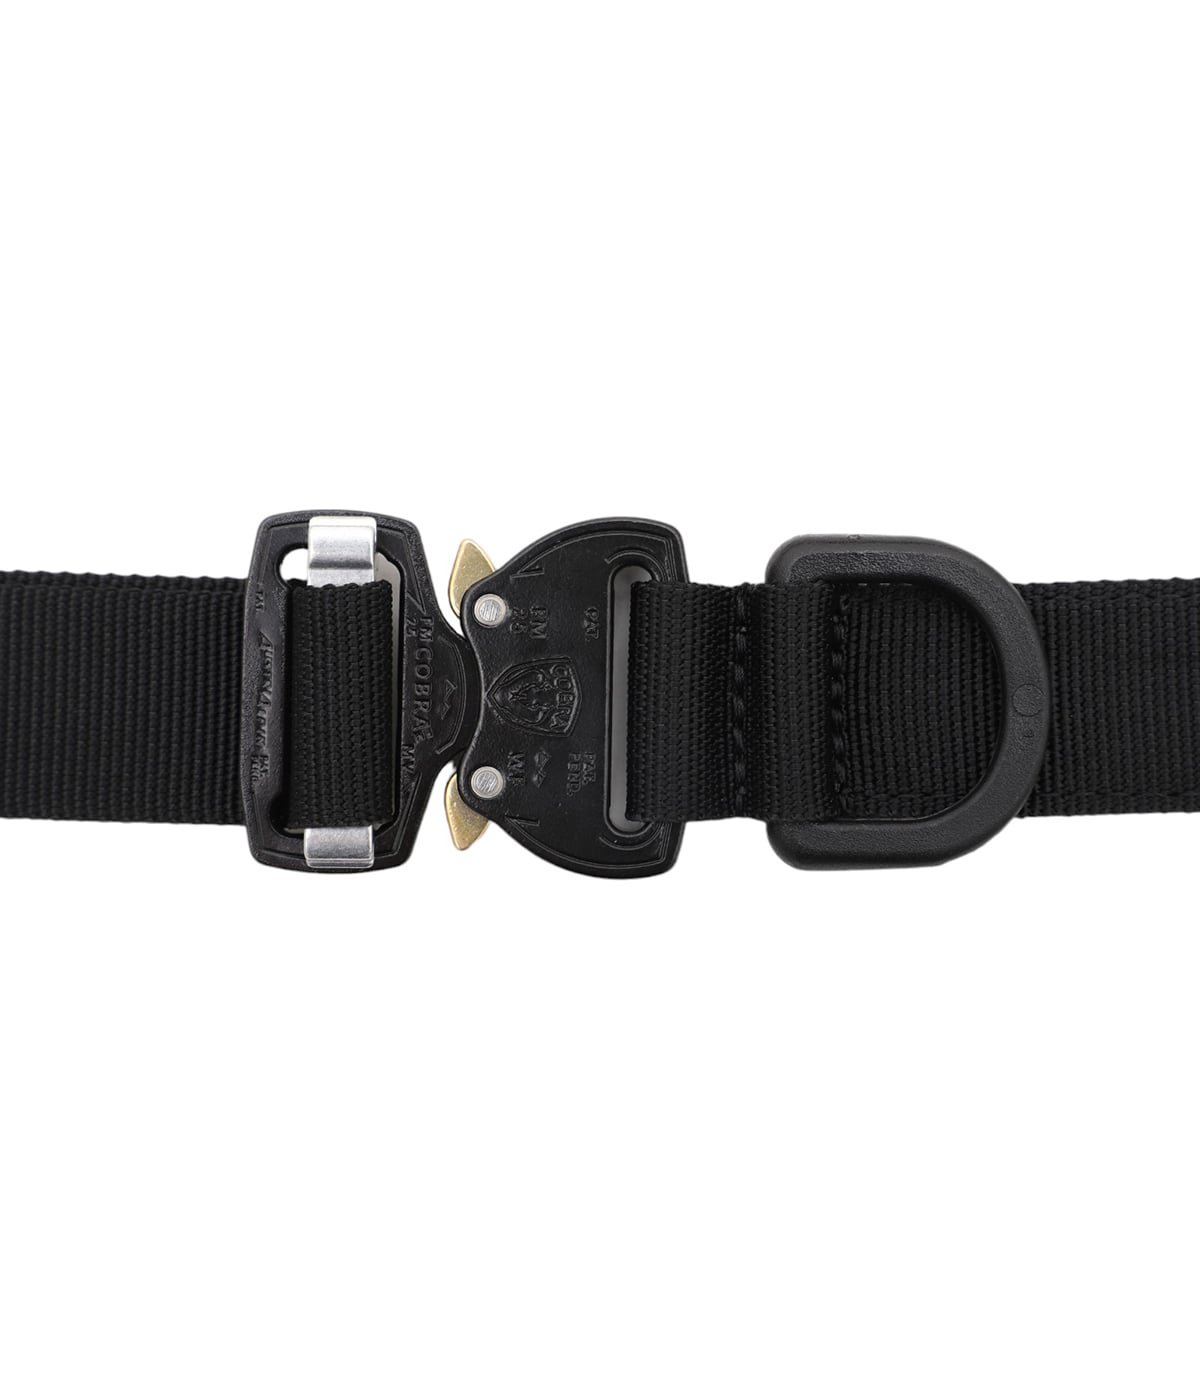 ONLY ARK】別注 NXL 25mm belt S for ARKnets | BAGJACK(バッグ